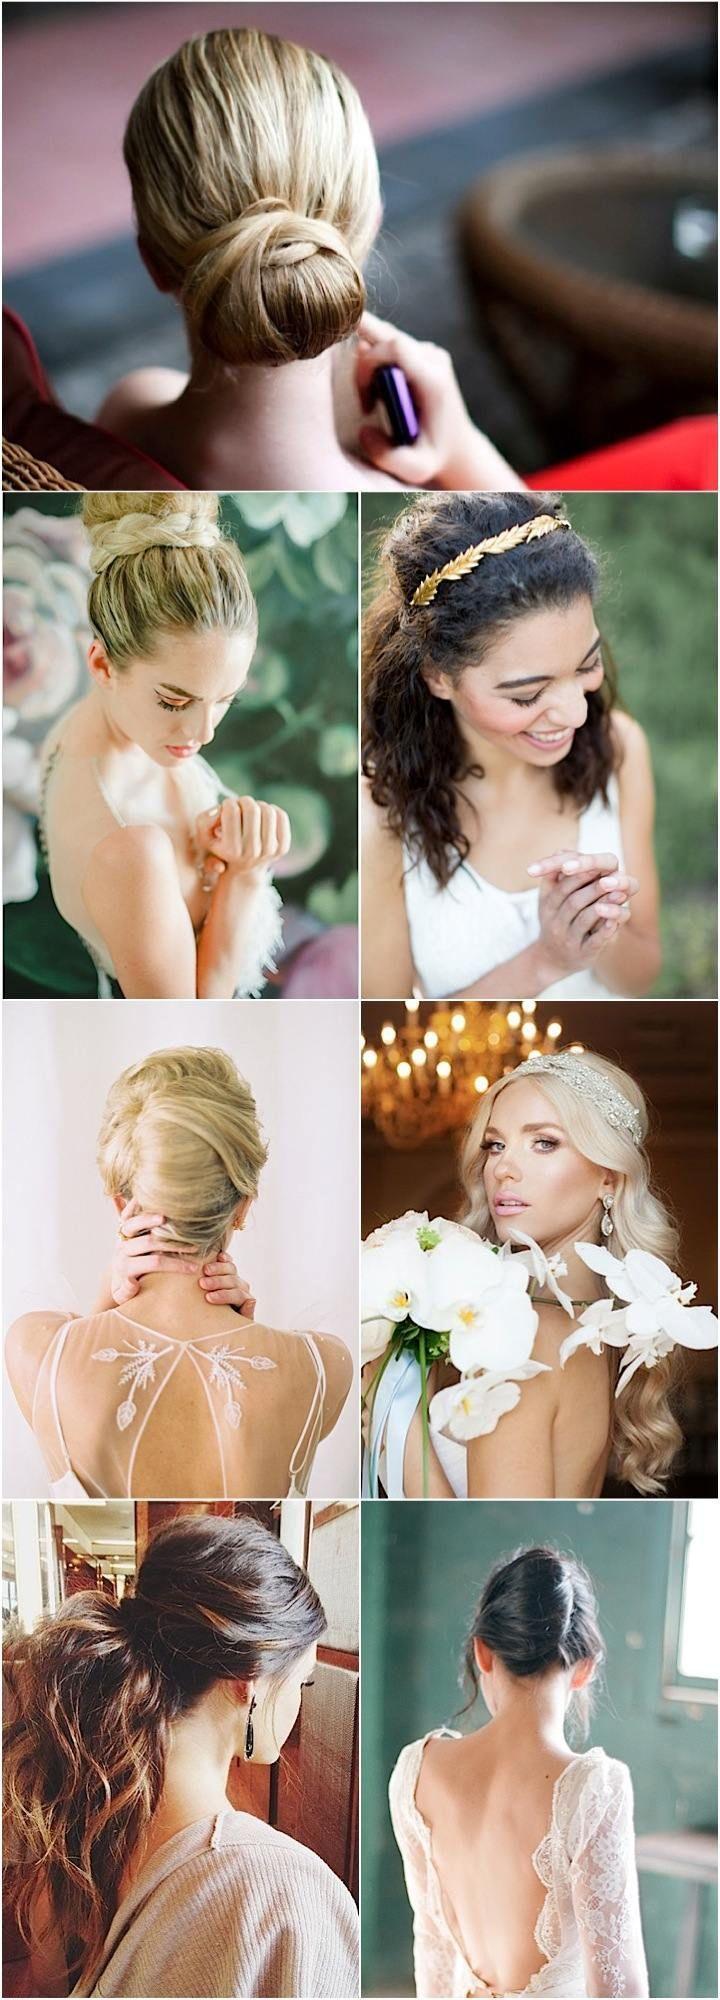 زفاف - Waves, Curls And Updos: Wedding Hairstyles For A Romantic Bridal Look